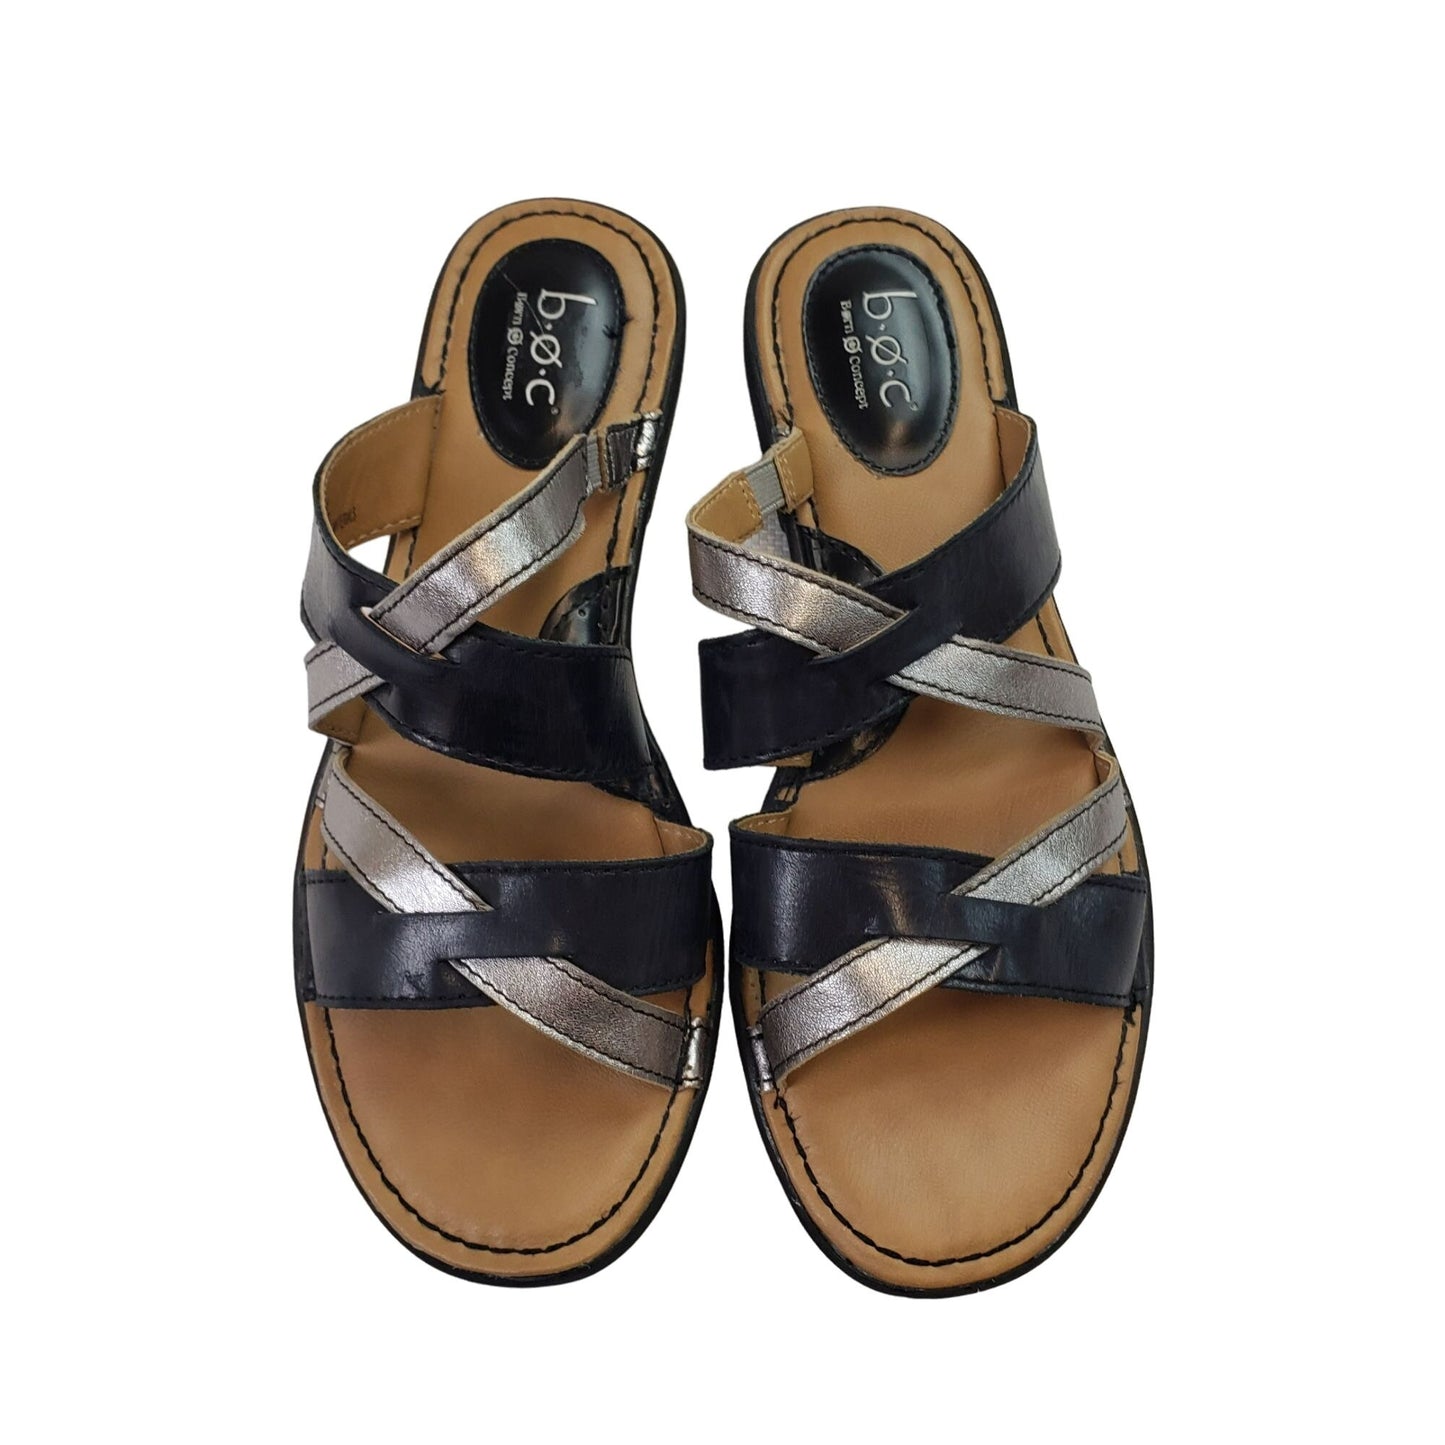 B.O.C. Born Leather Strappy Metallic Sandals Size 9